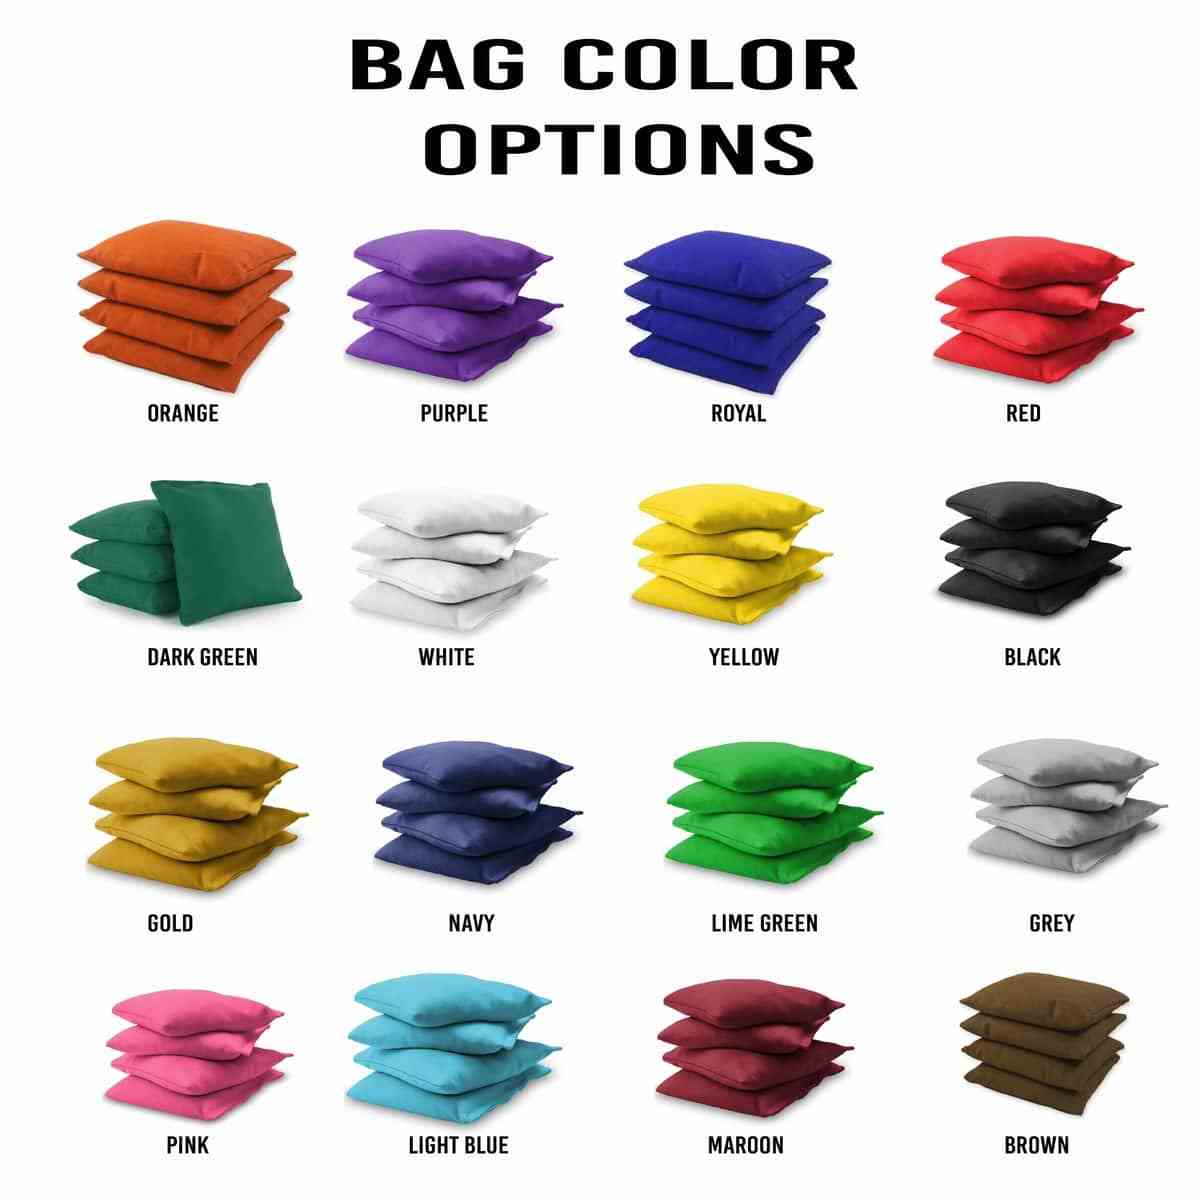 Massachusetts State 2x4 bag colors